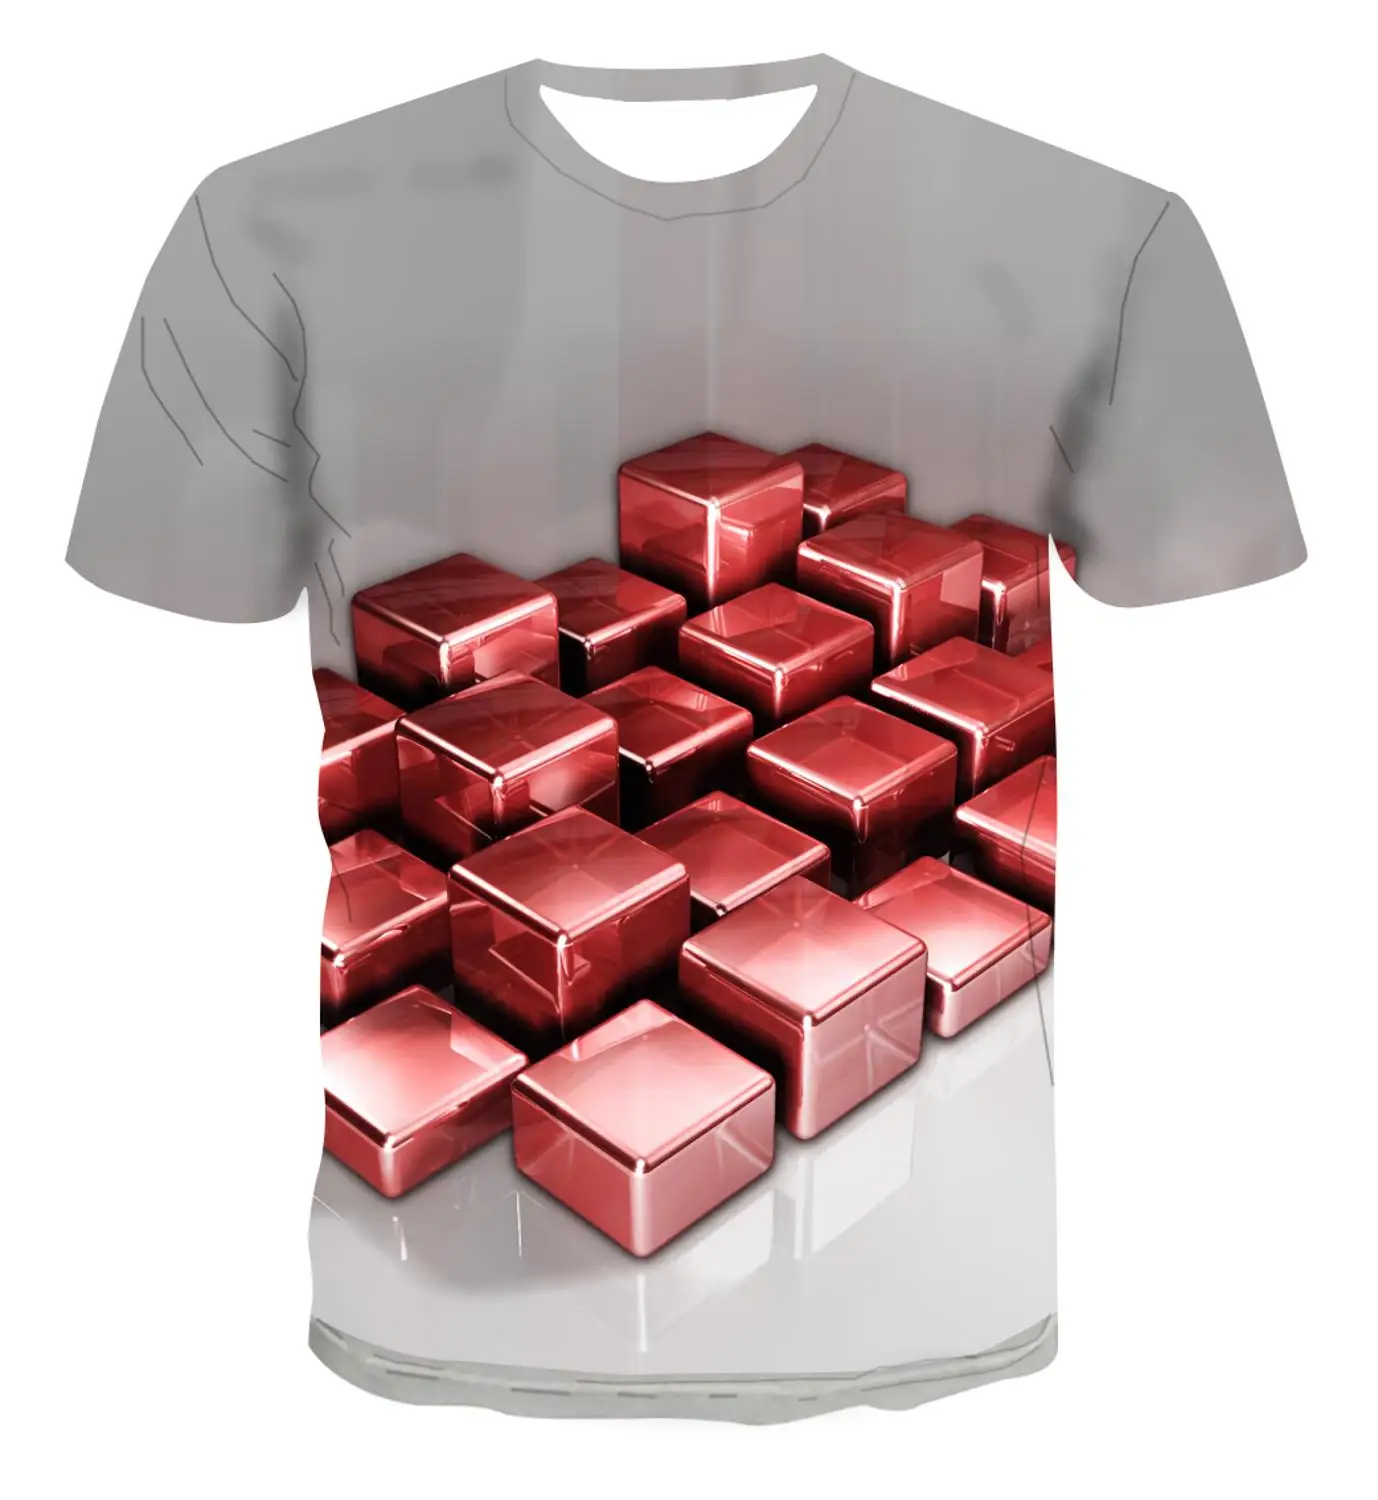 

2020 Fashion hot sale New Psychedelic t-shirt men's 3D T-shirt vertigo printed T-shirt short sleeve casual summer top s-6xl